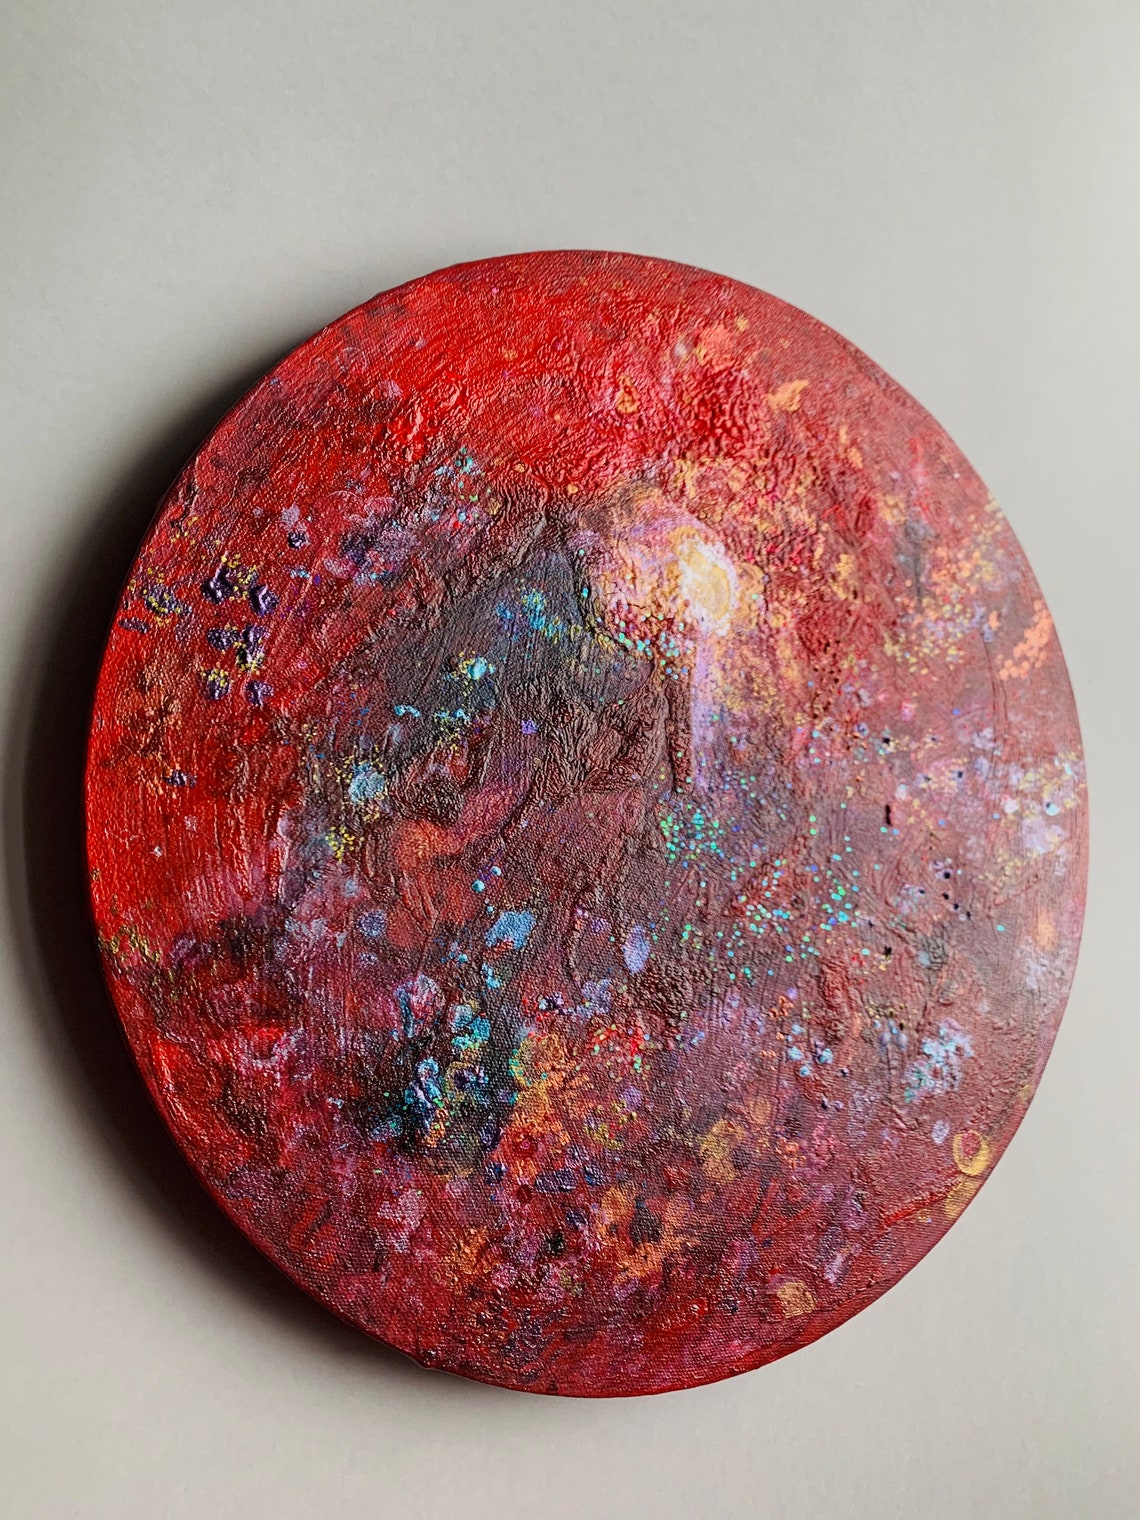 Red Moon Acrylic painting Painting moon Original Acrylic | Etsy